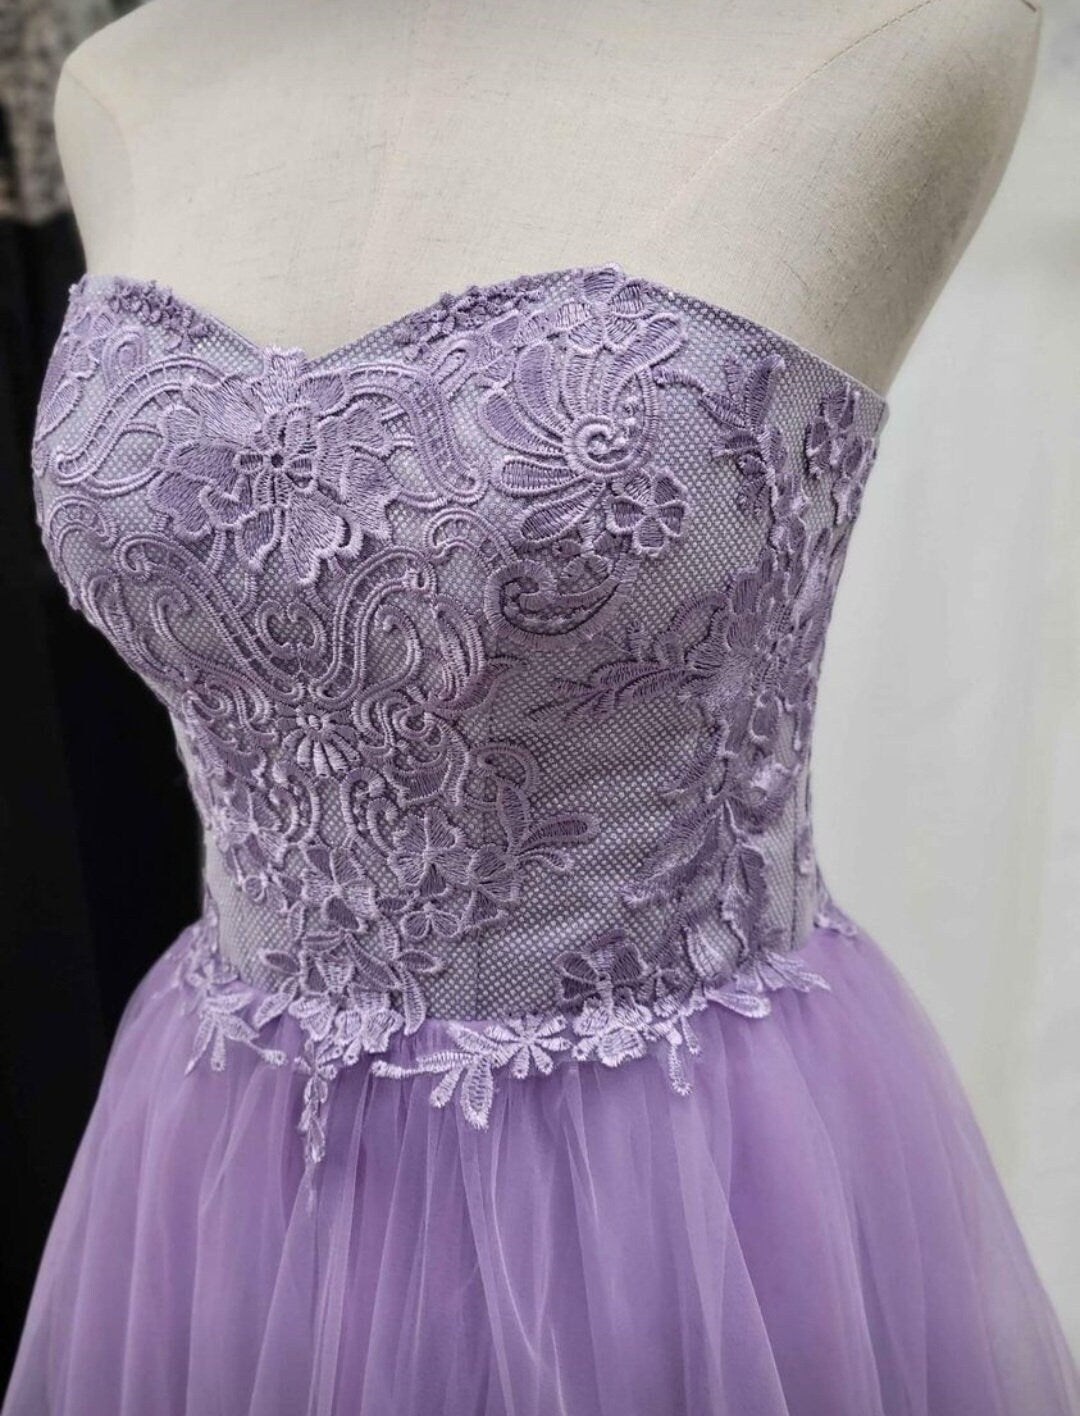 Simple Sleeveless Strapless Purple Sweetheart Neckline Corset Back Aline Prom Bridesmaid Dress Floor Length Tulle Skirt Lace Bodice Size 6